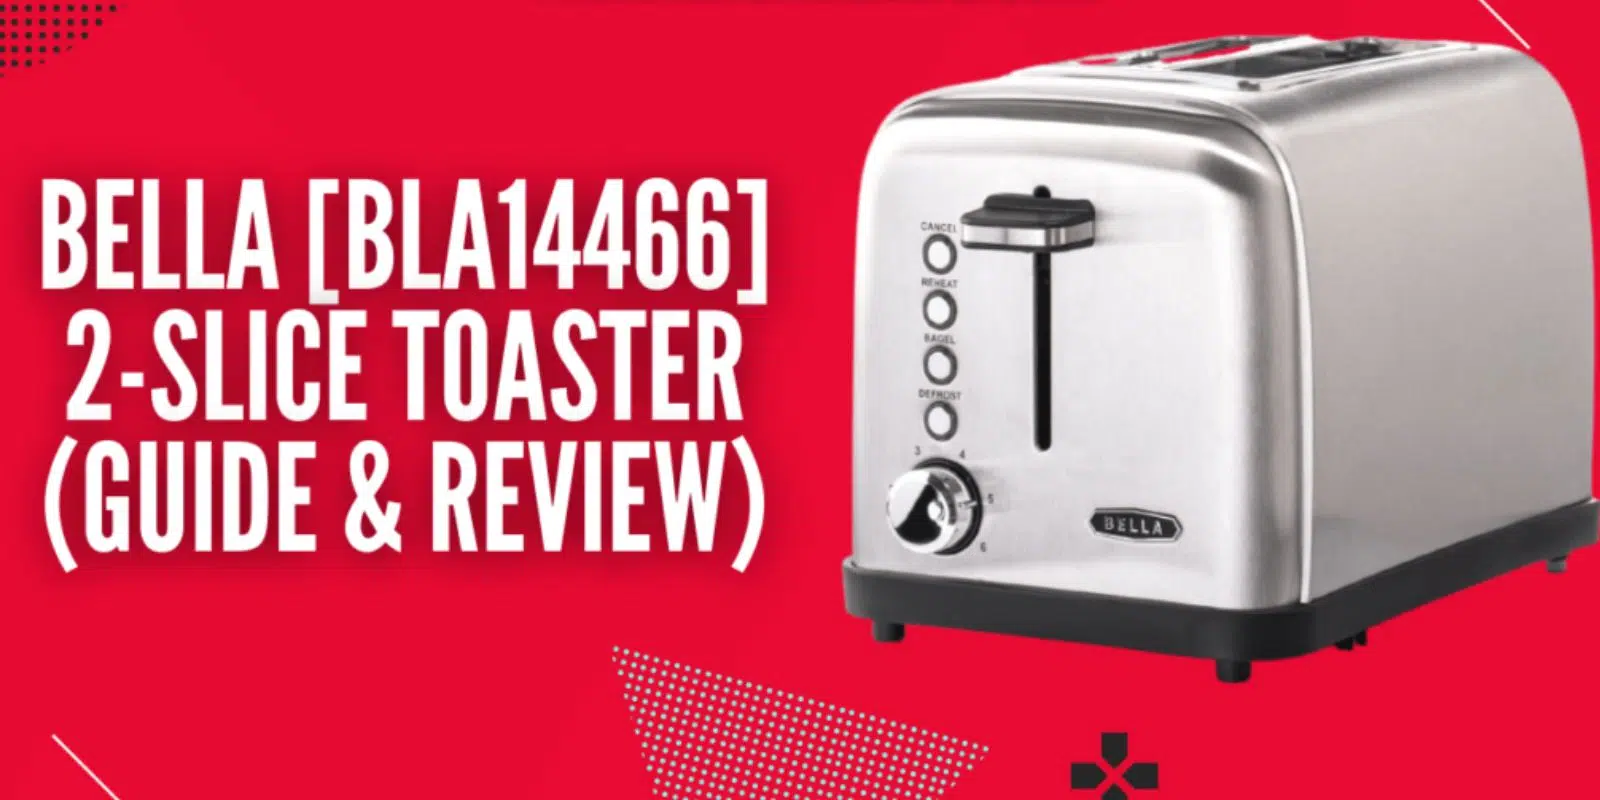 Bella [BLA14466] 2-Slice Toaster (Full Review) | Benefits & Expert Options